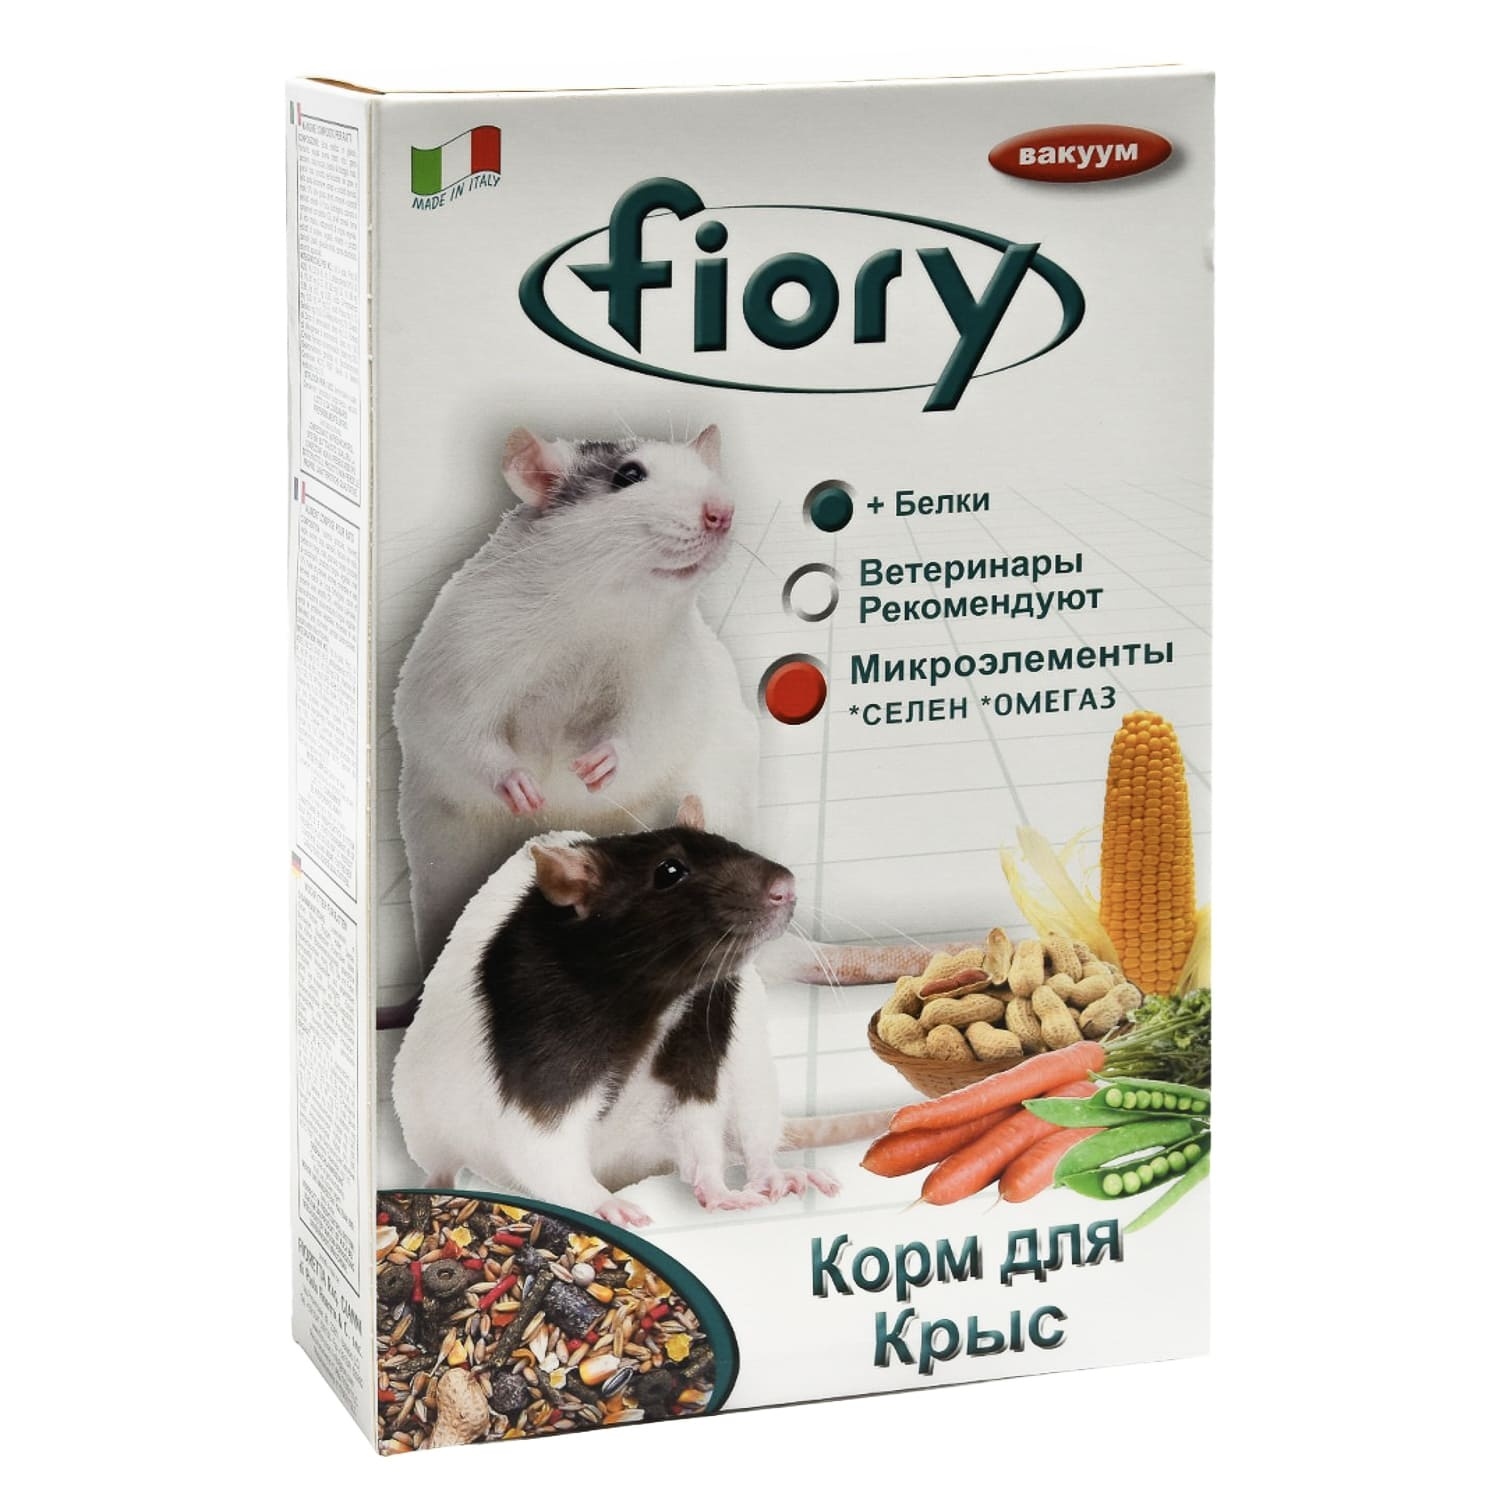 Fiory Fiory корм для крыс (850 г)